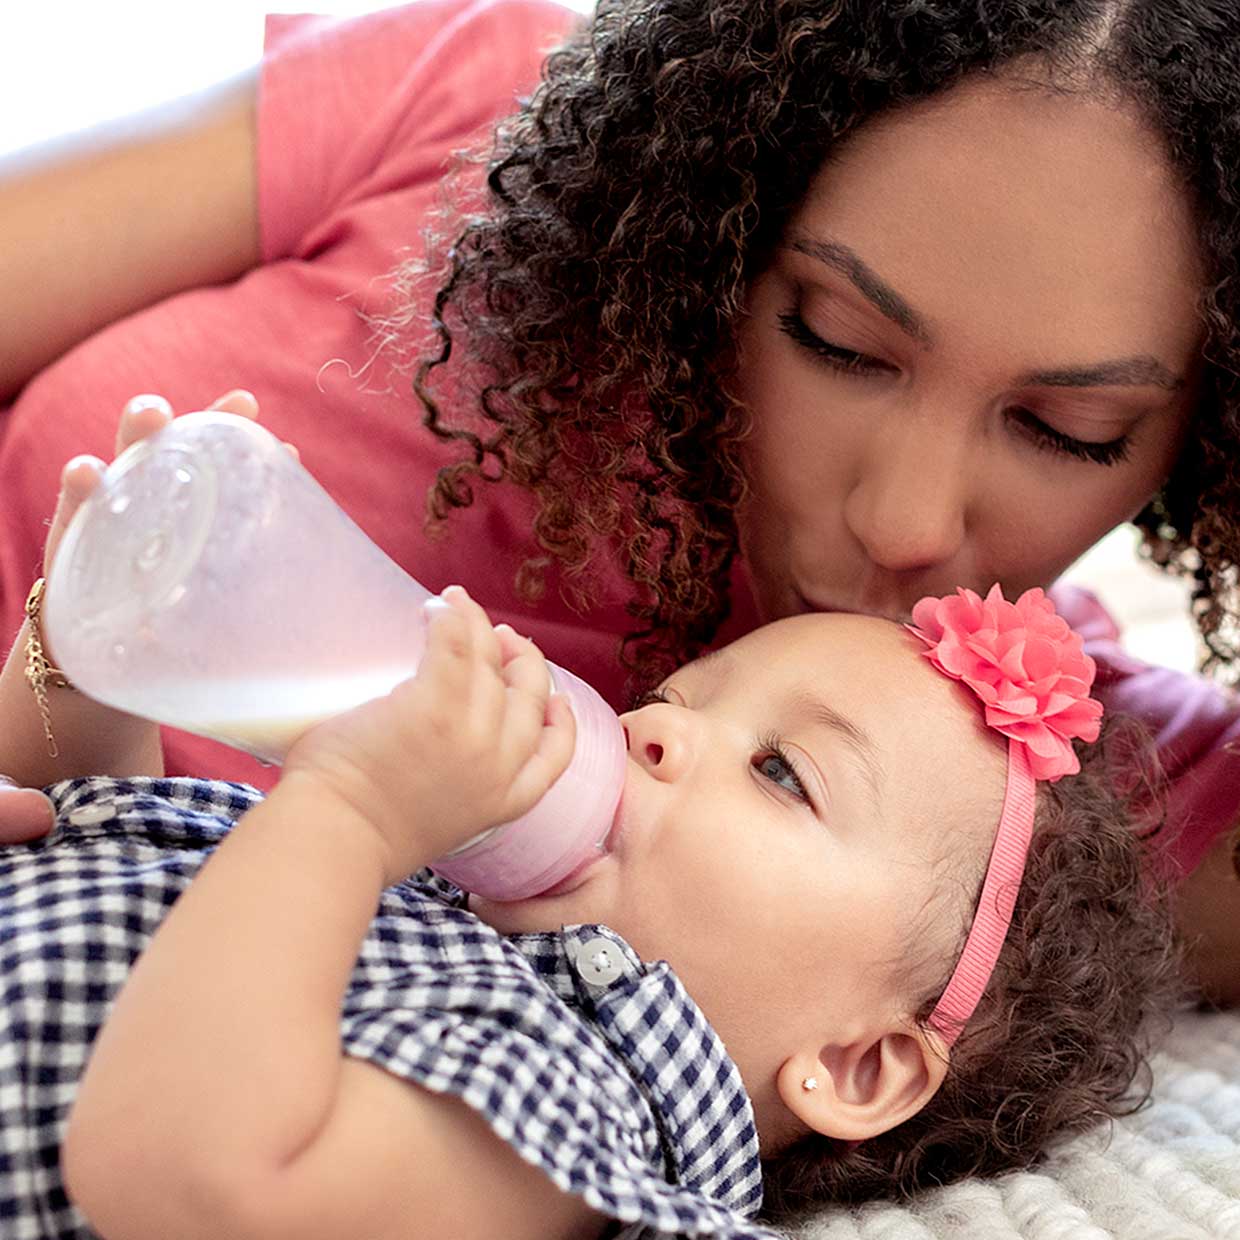 When Do Babies Start Holding Their Own Bottle?